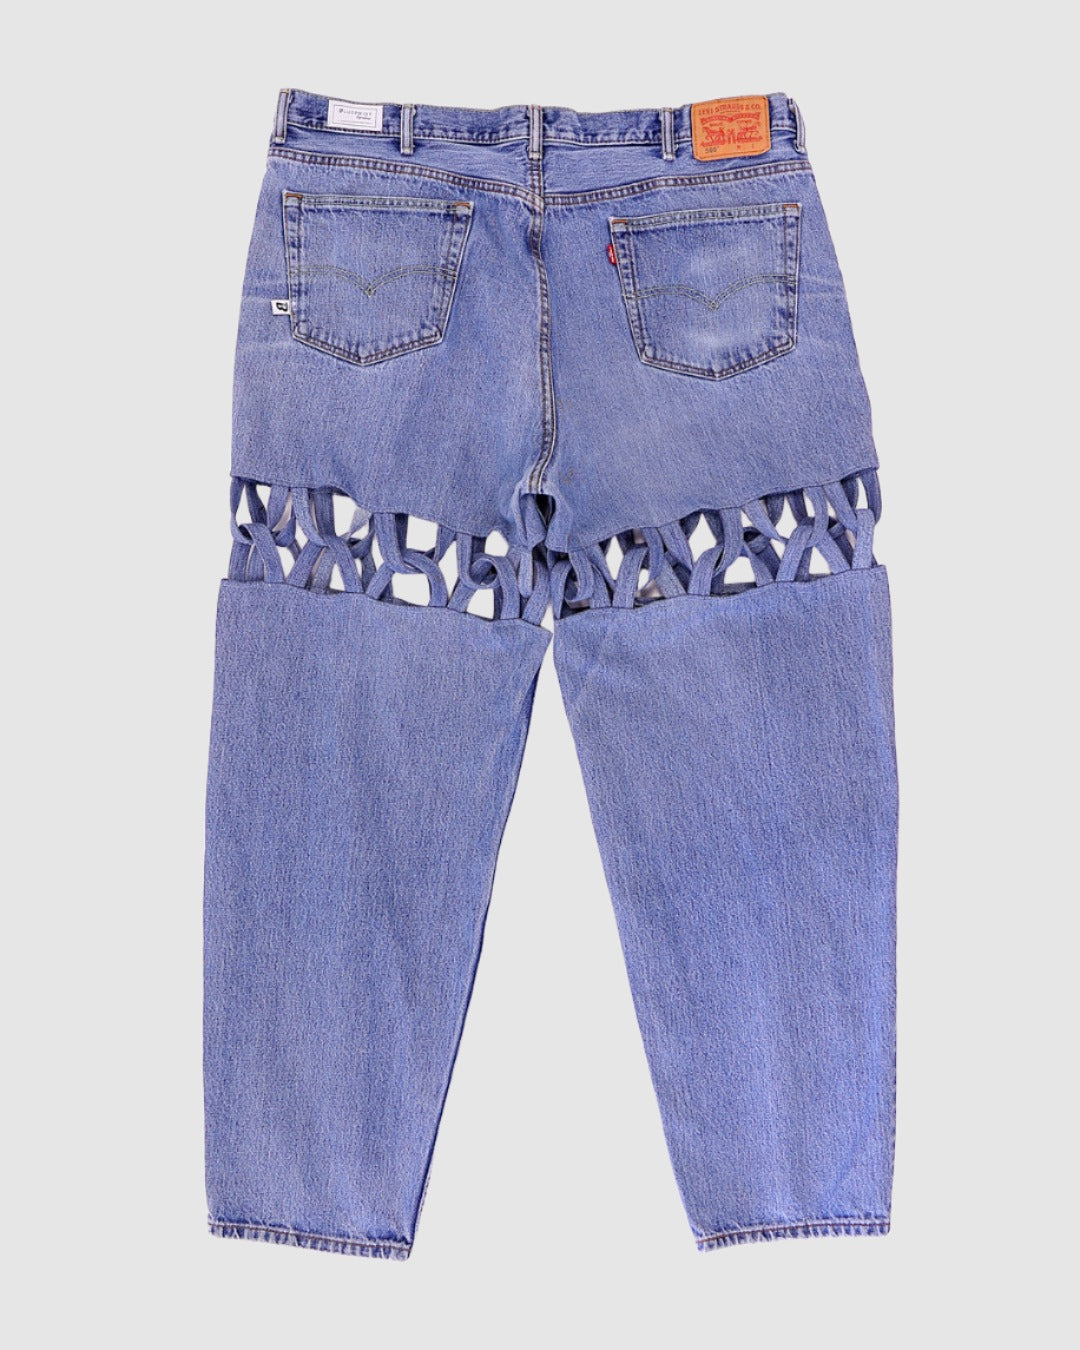 Criss Cross Jeans (size 26)